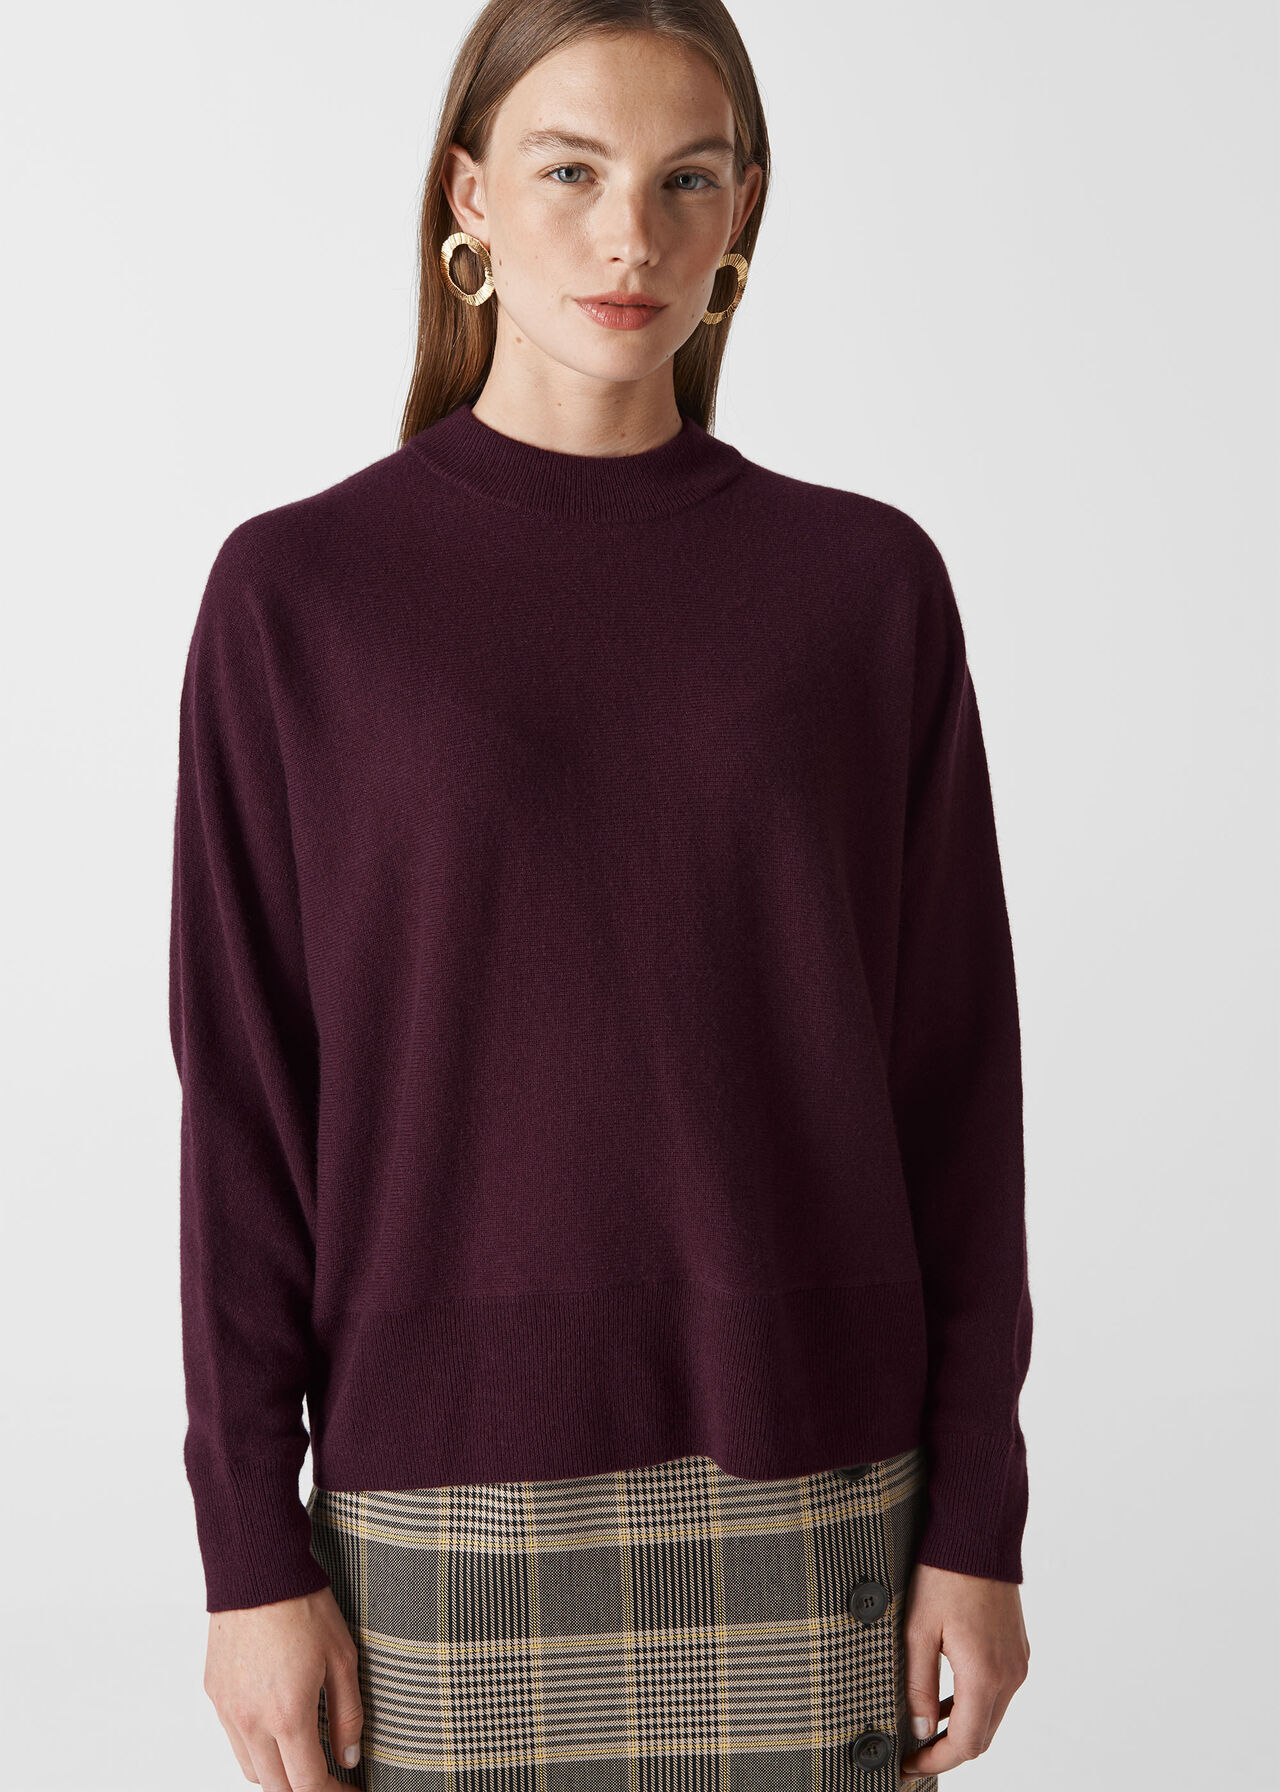 Wool Cashmere Dolman Turtle Neck Sweater